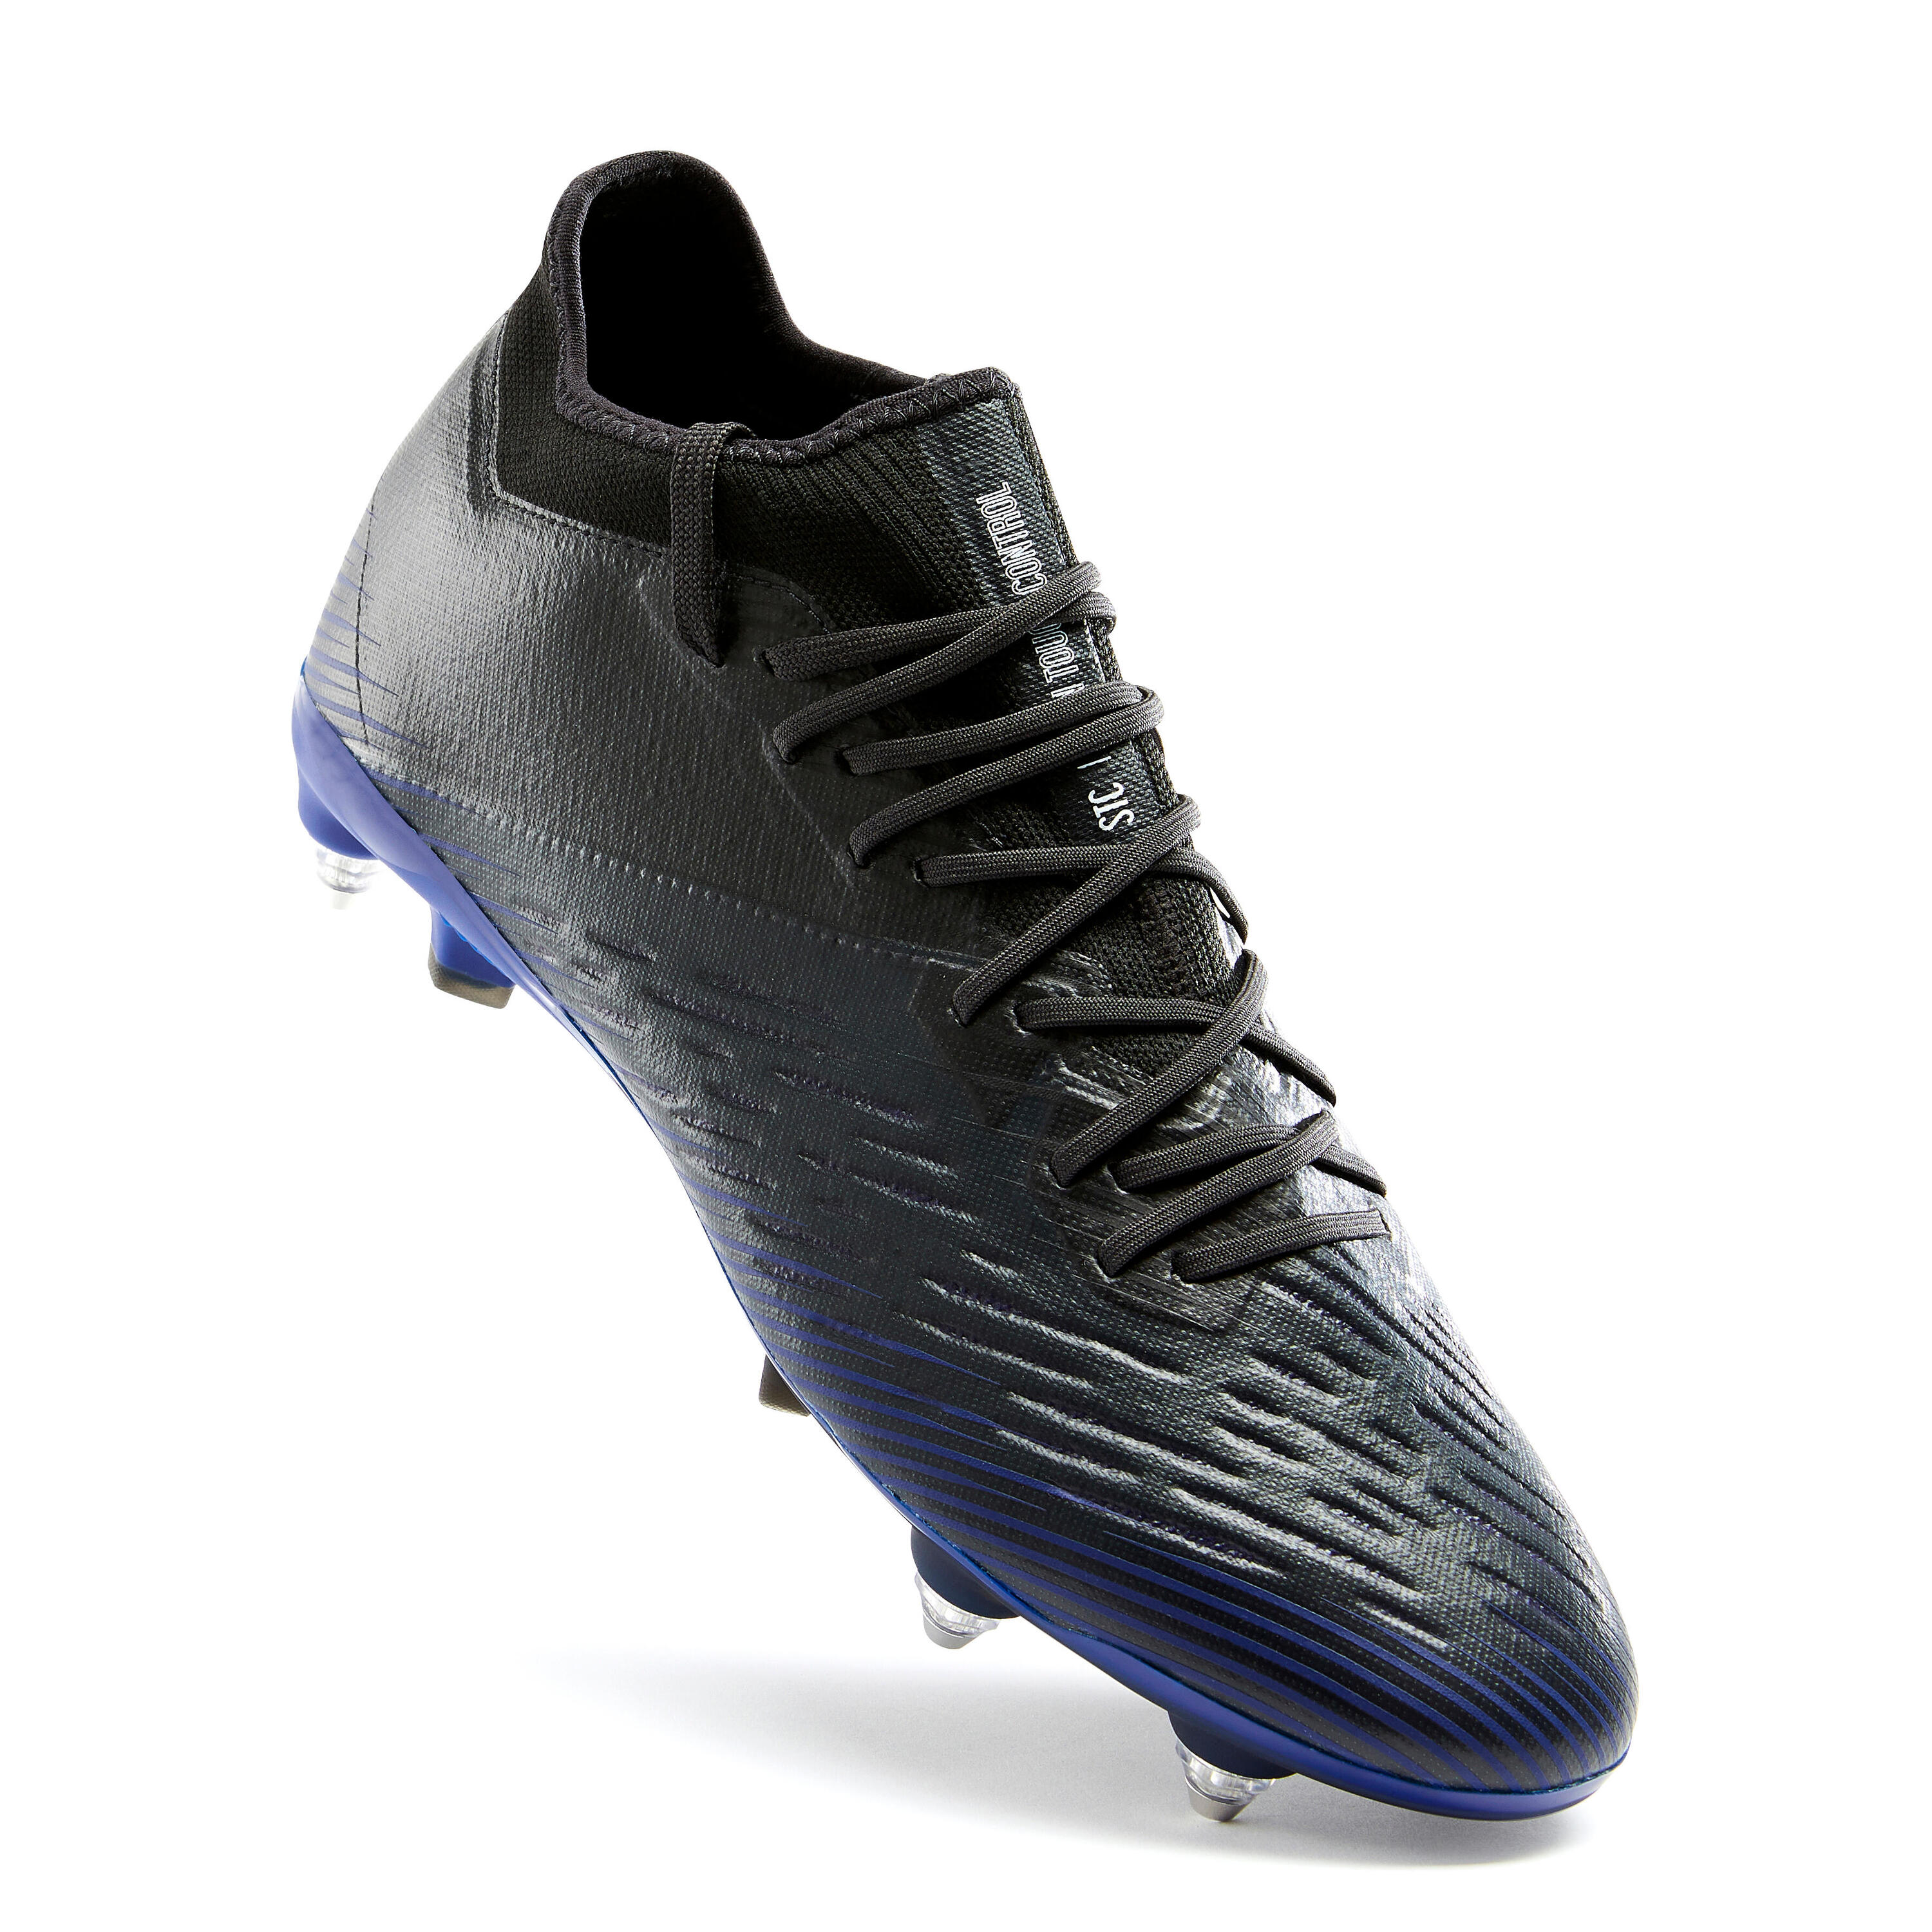 Adult Soft Ground Football Boots CLR SG - Black/Blue 4/8